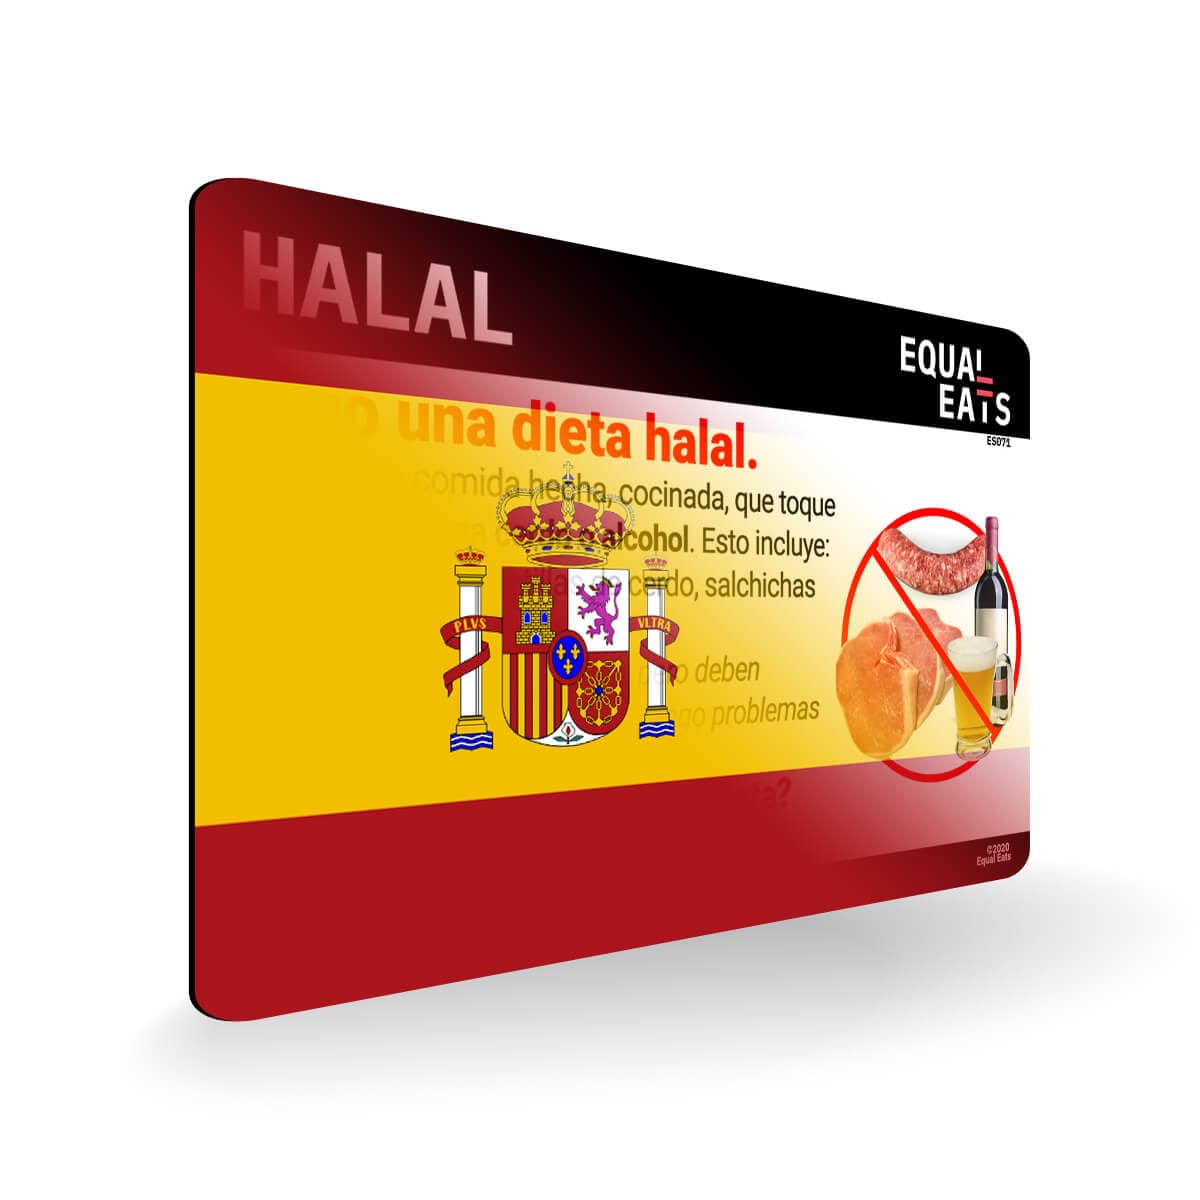 Halal Diet in Spanish. Halal Food Card for Spain